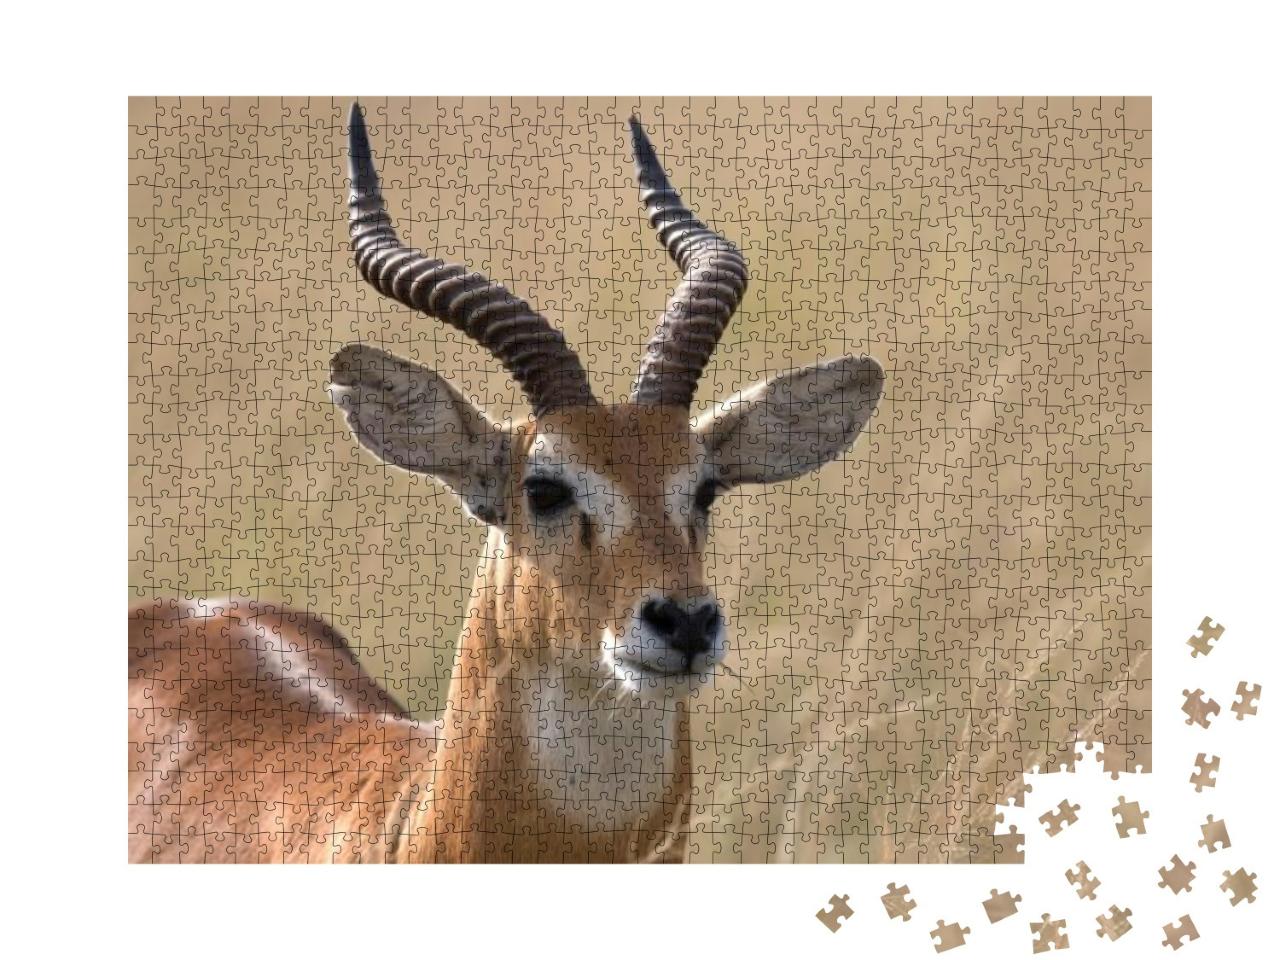 Ugandan Kob Antelope Free Ranging the African Savanna... Jigsaw Puzzle with 1000 pieces